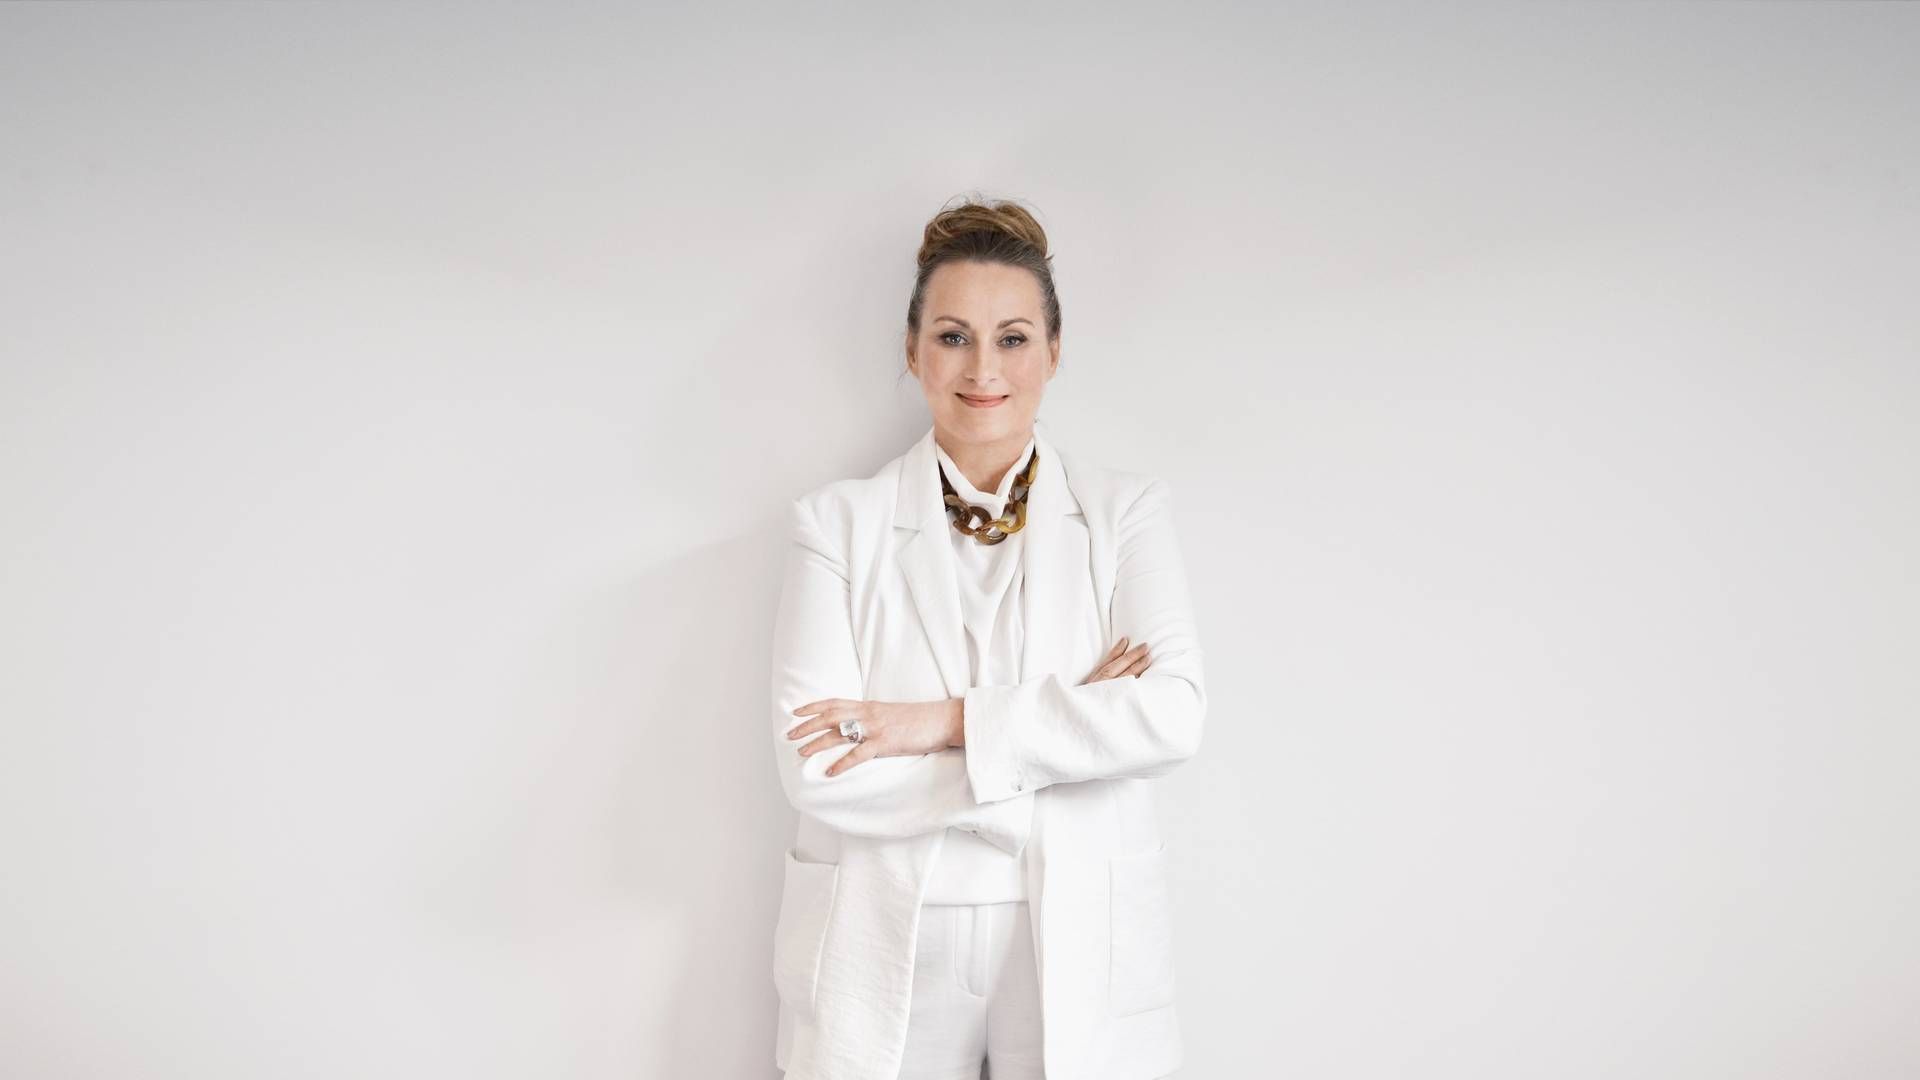 Bettina Lange har været dansk landechef hos Castellum siden 2017.